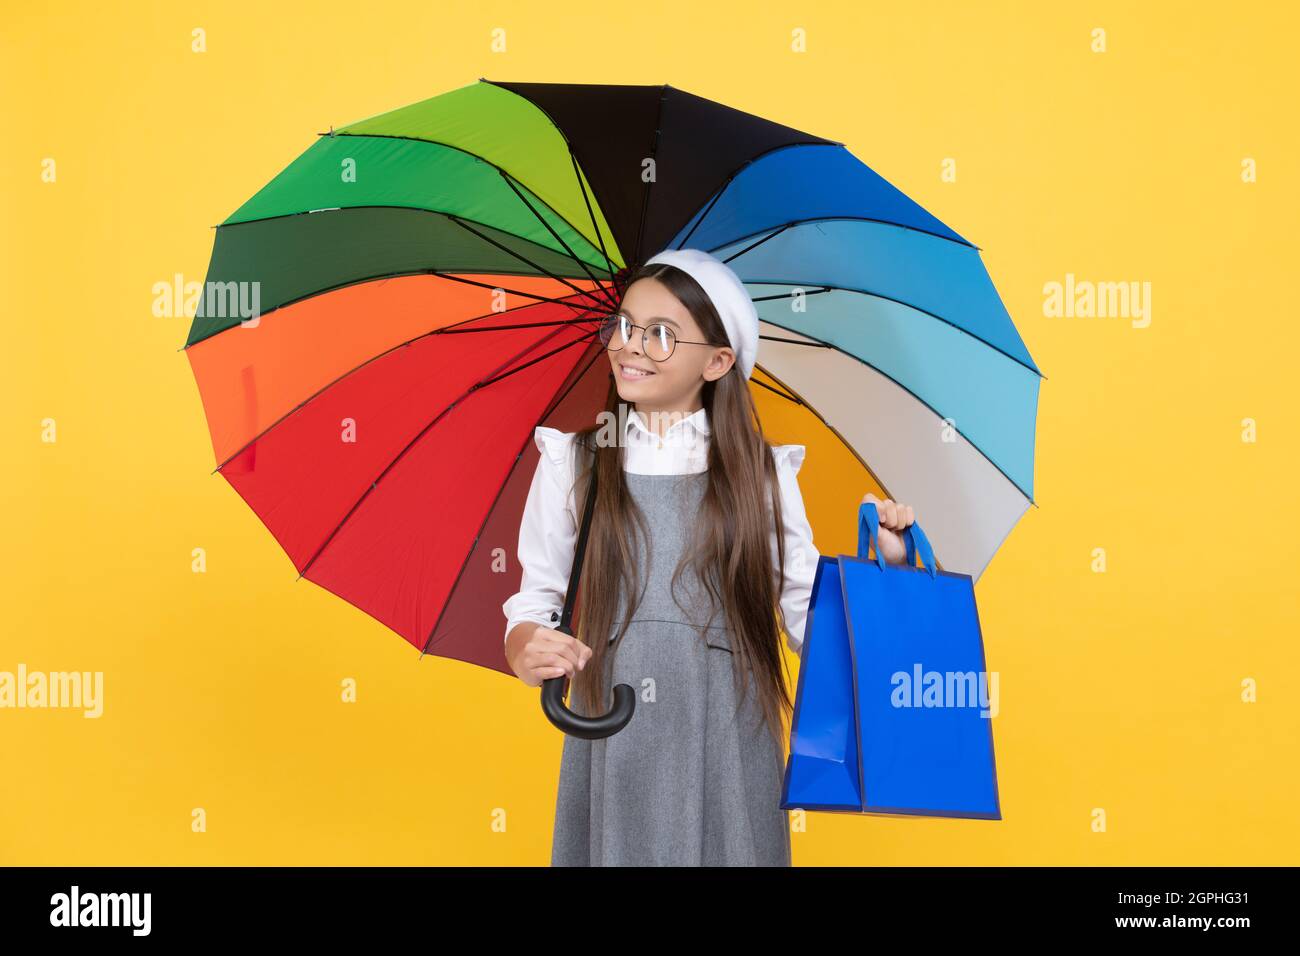 seasonal sale. teen kid under colorful parasol. kid beret with rainbow umbrella. autumn season. Stock Photo